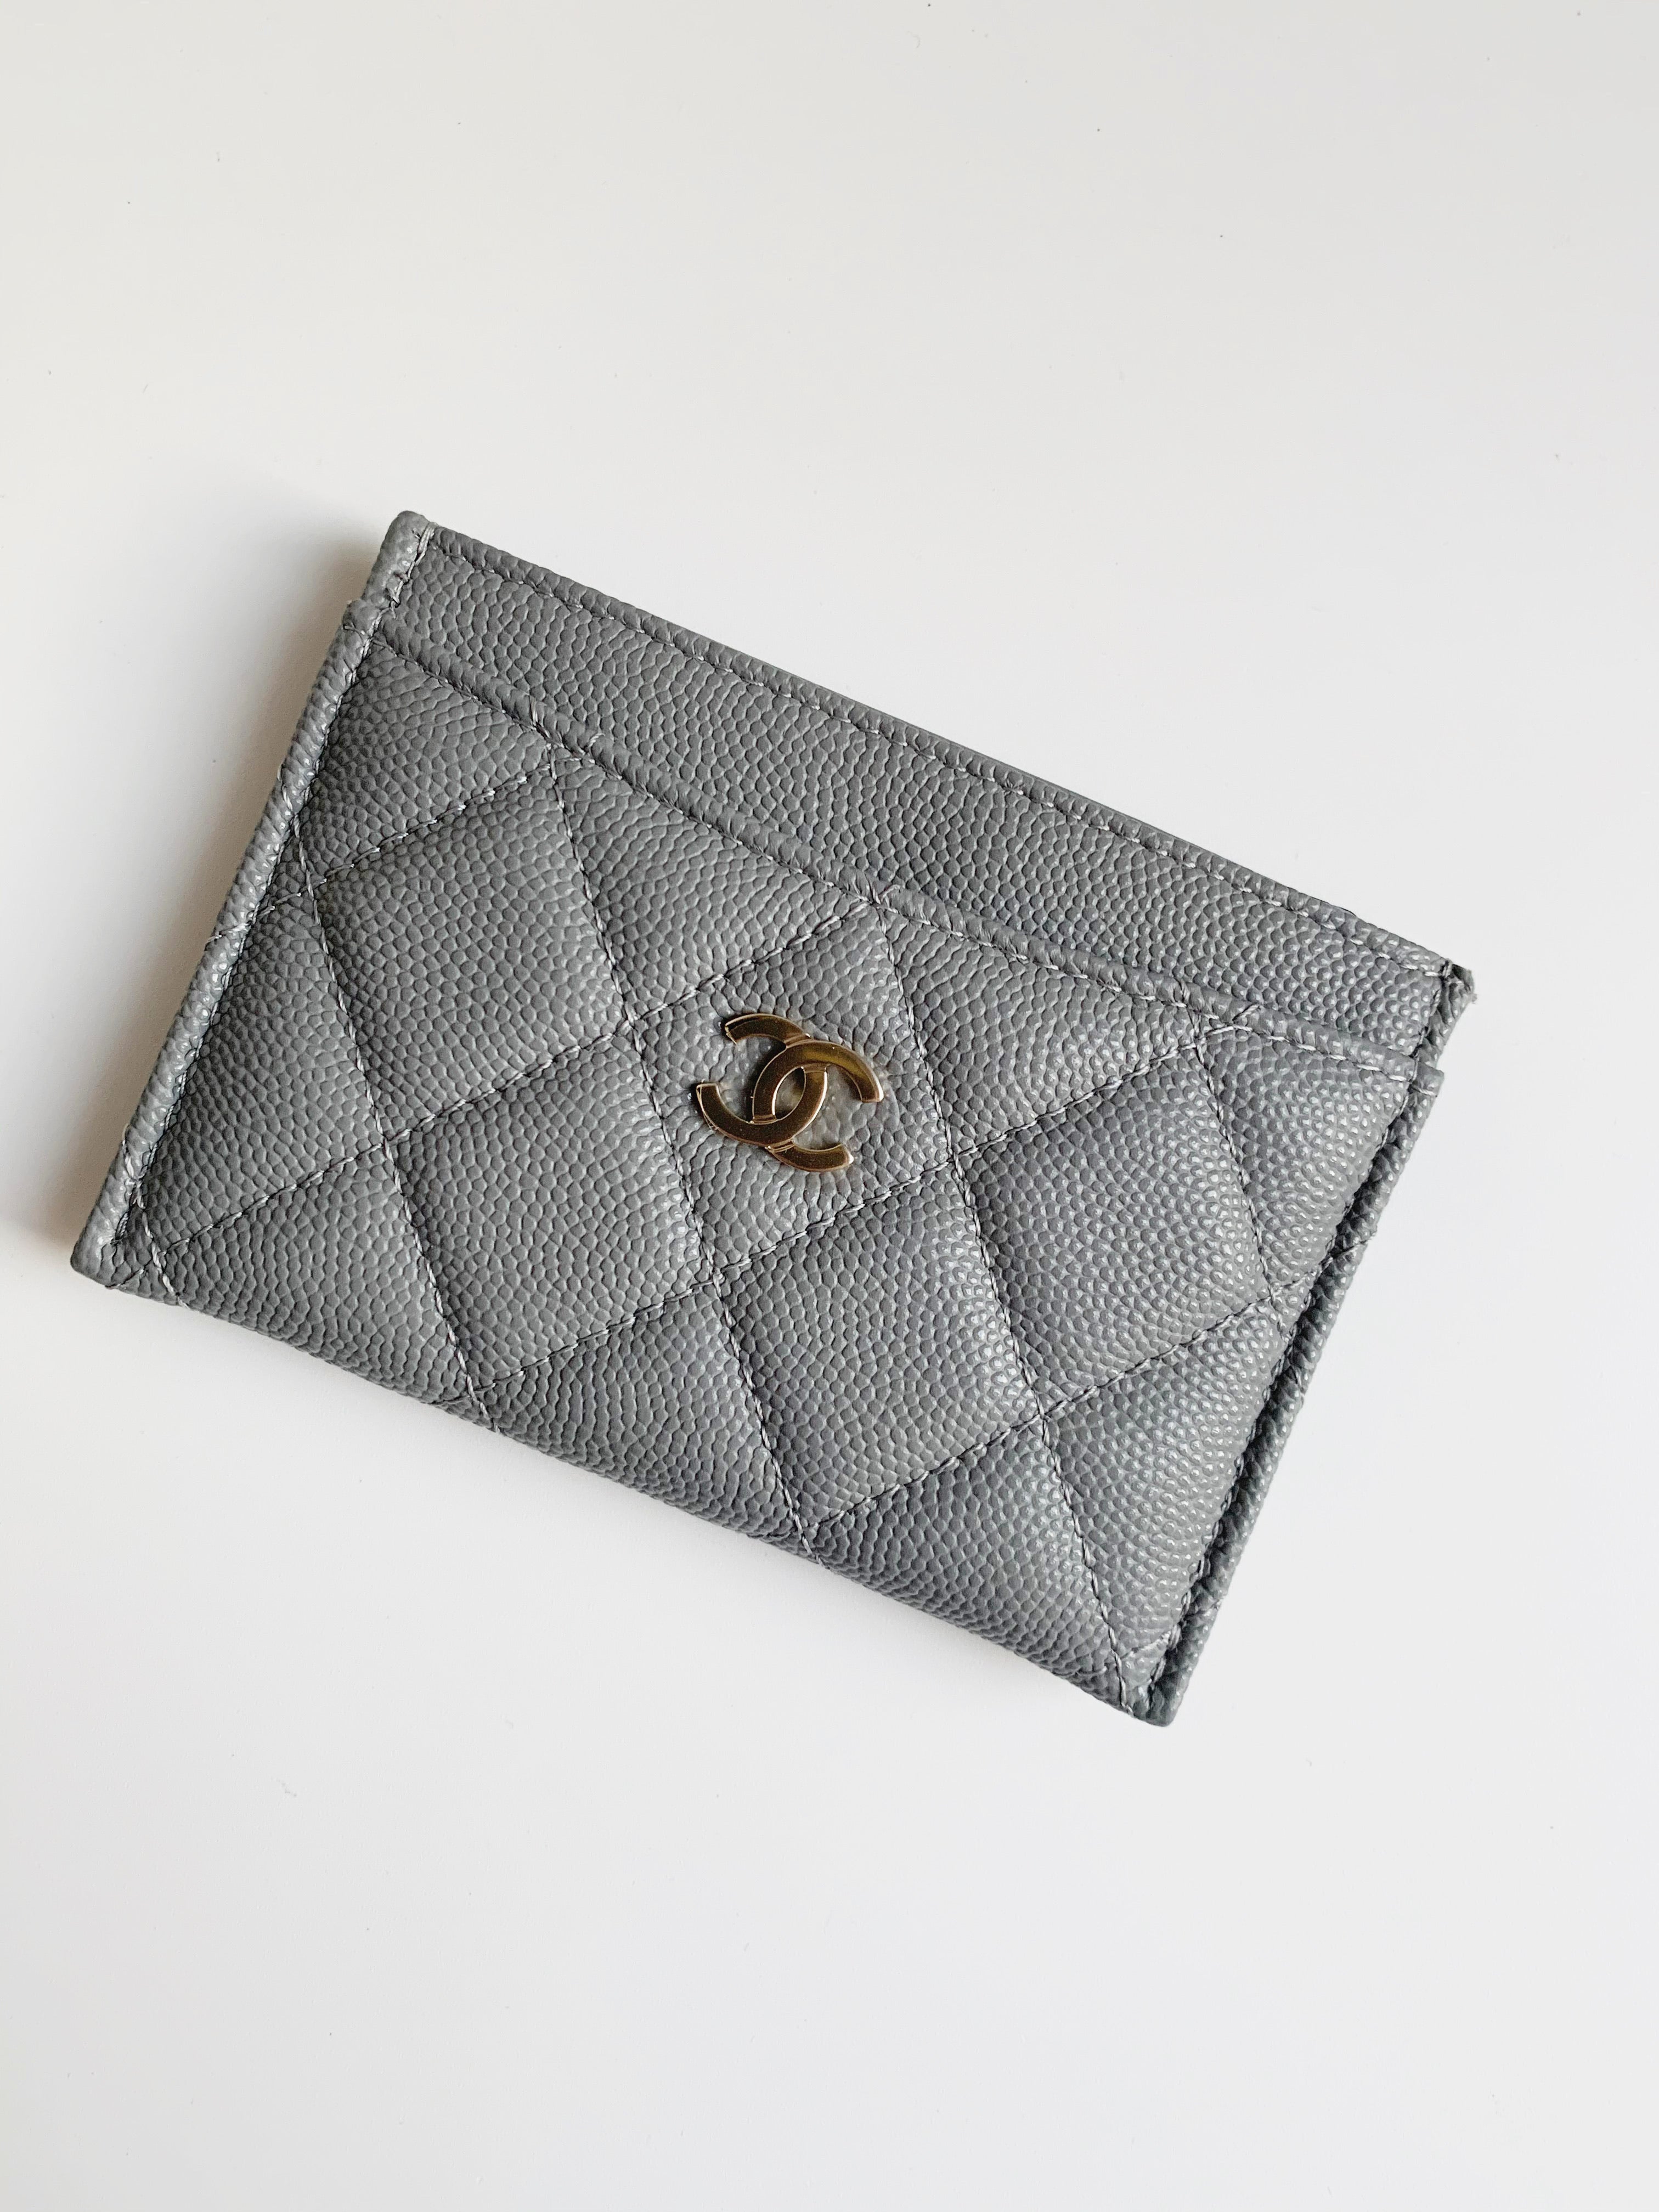 CHANEL, Bags, Chanel Grey Card Holder Light Gold Hardware